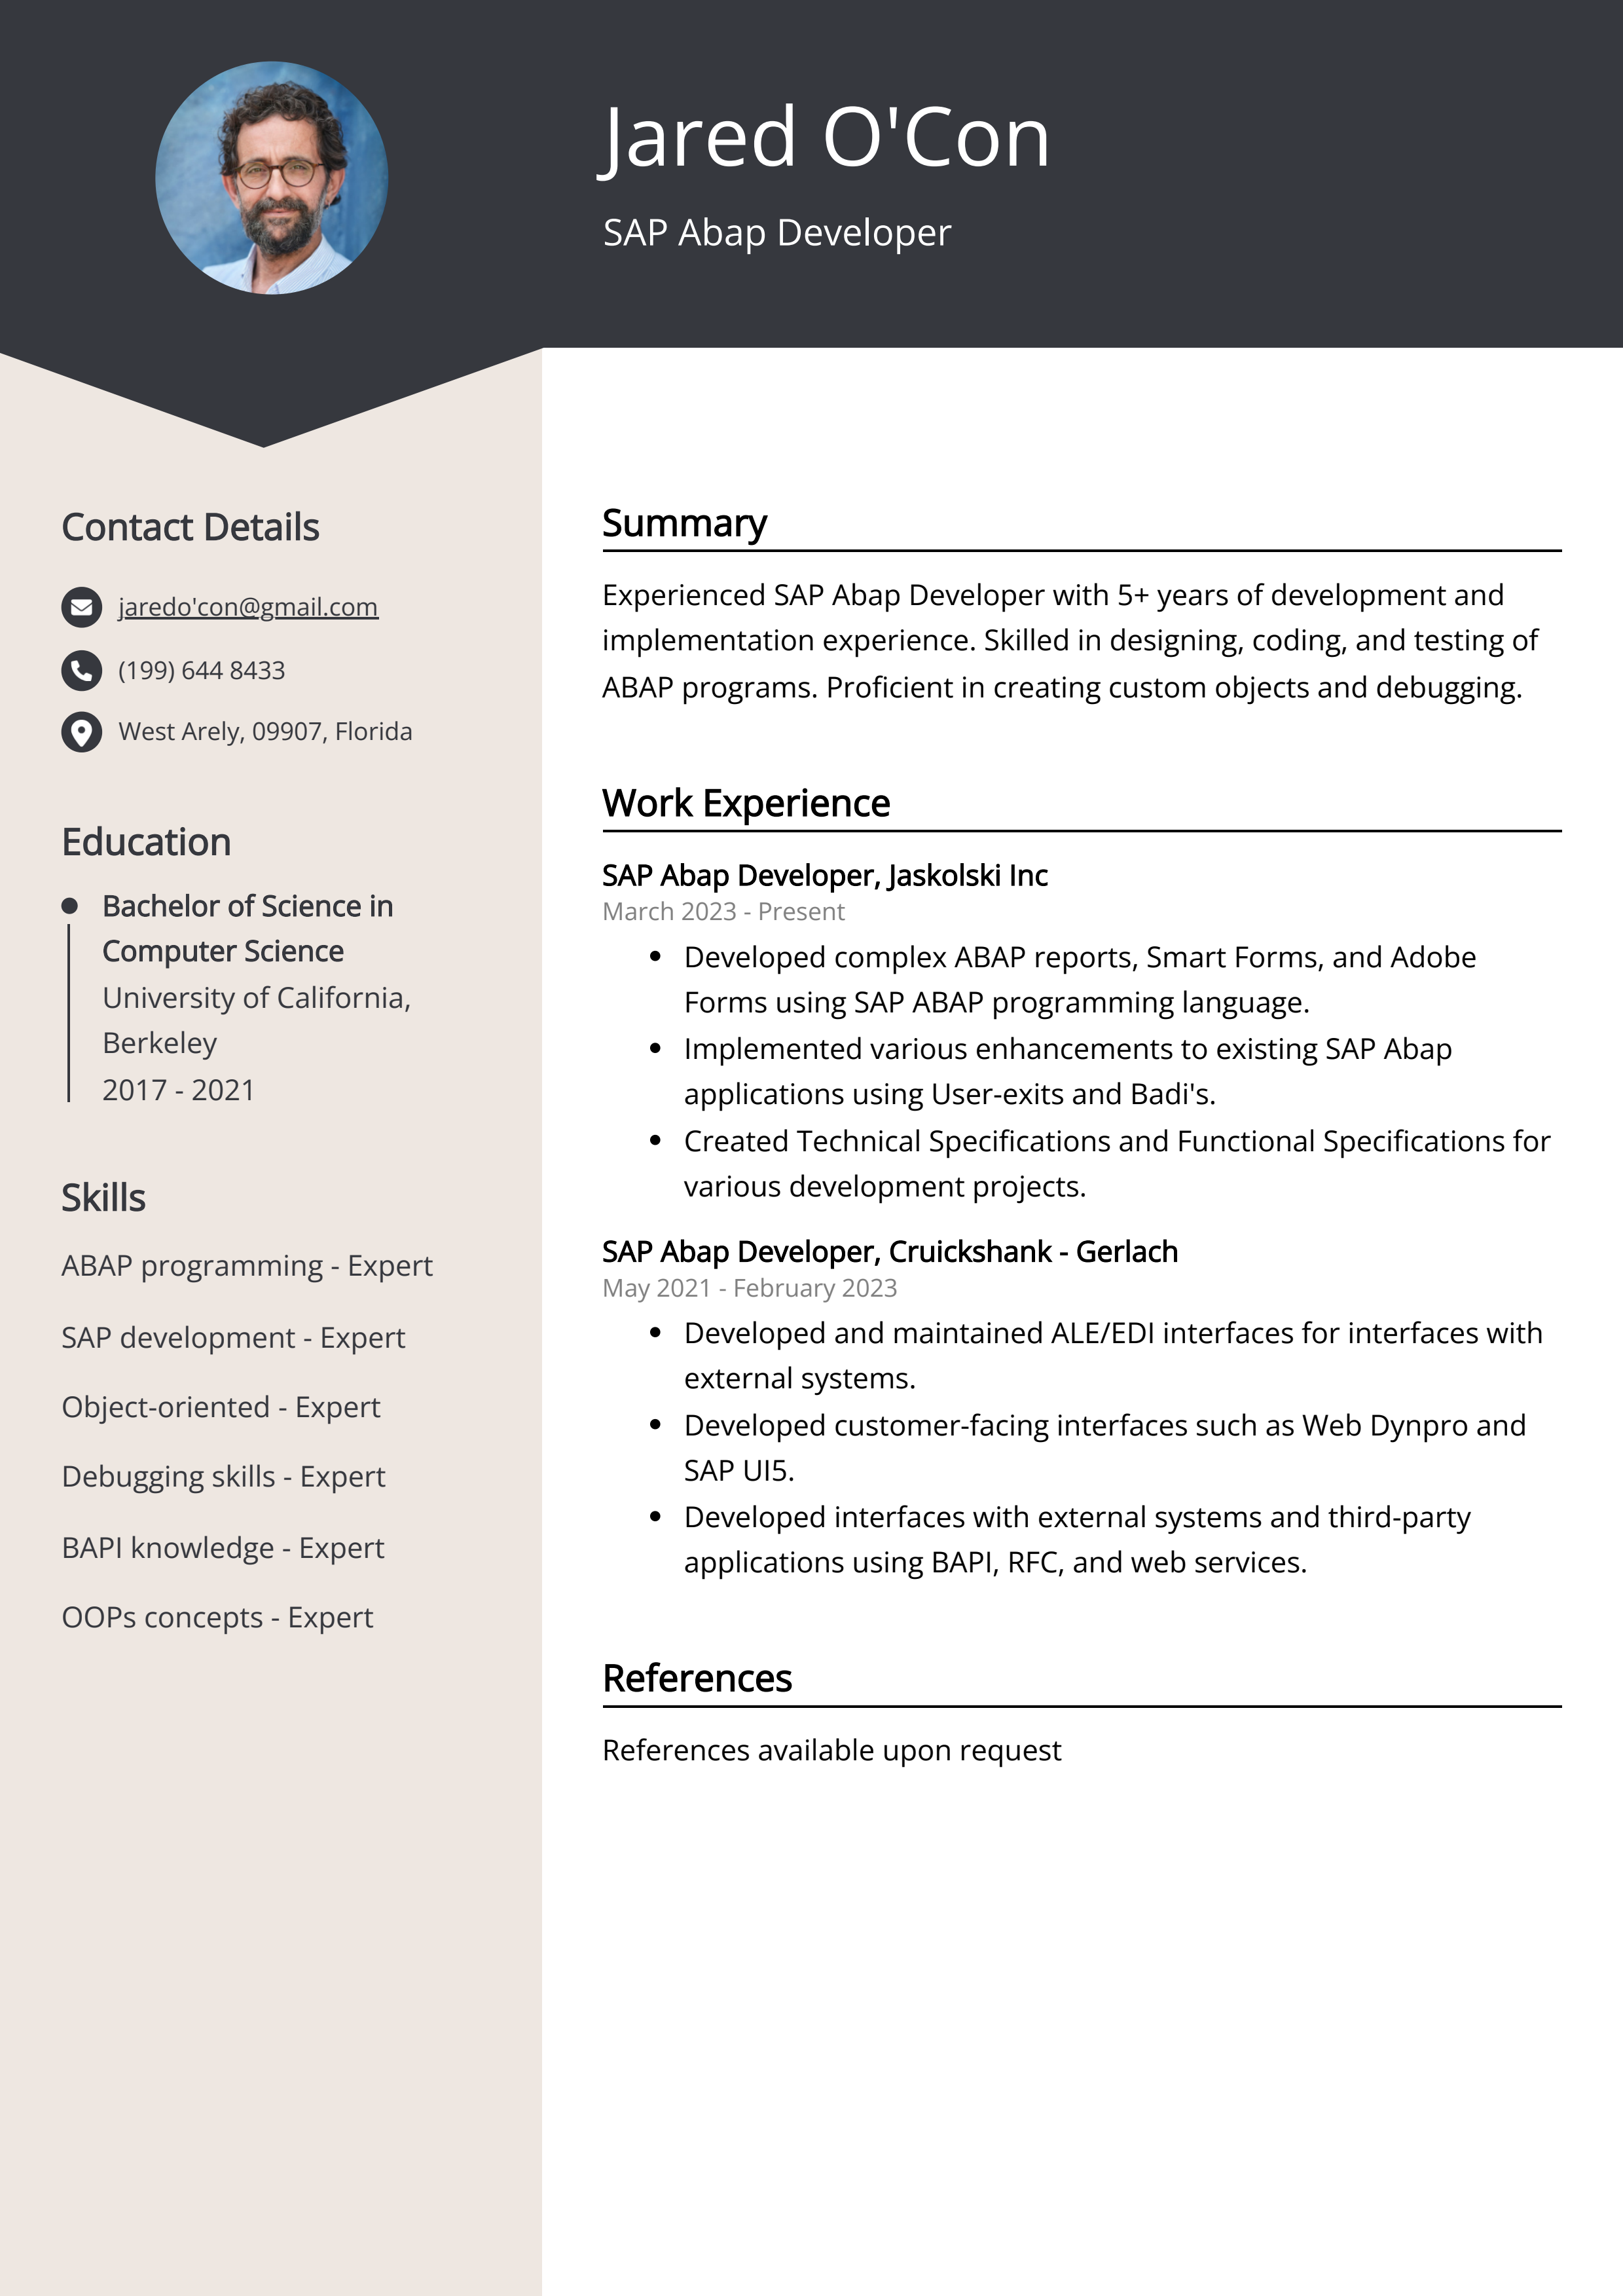 SAP Abap Developer CV Example